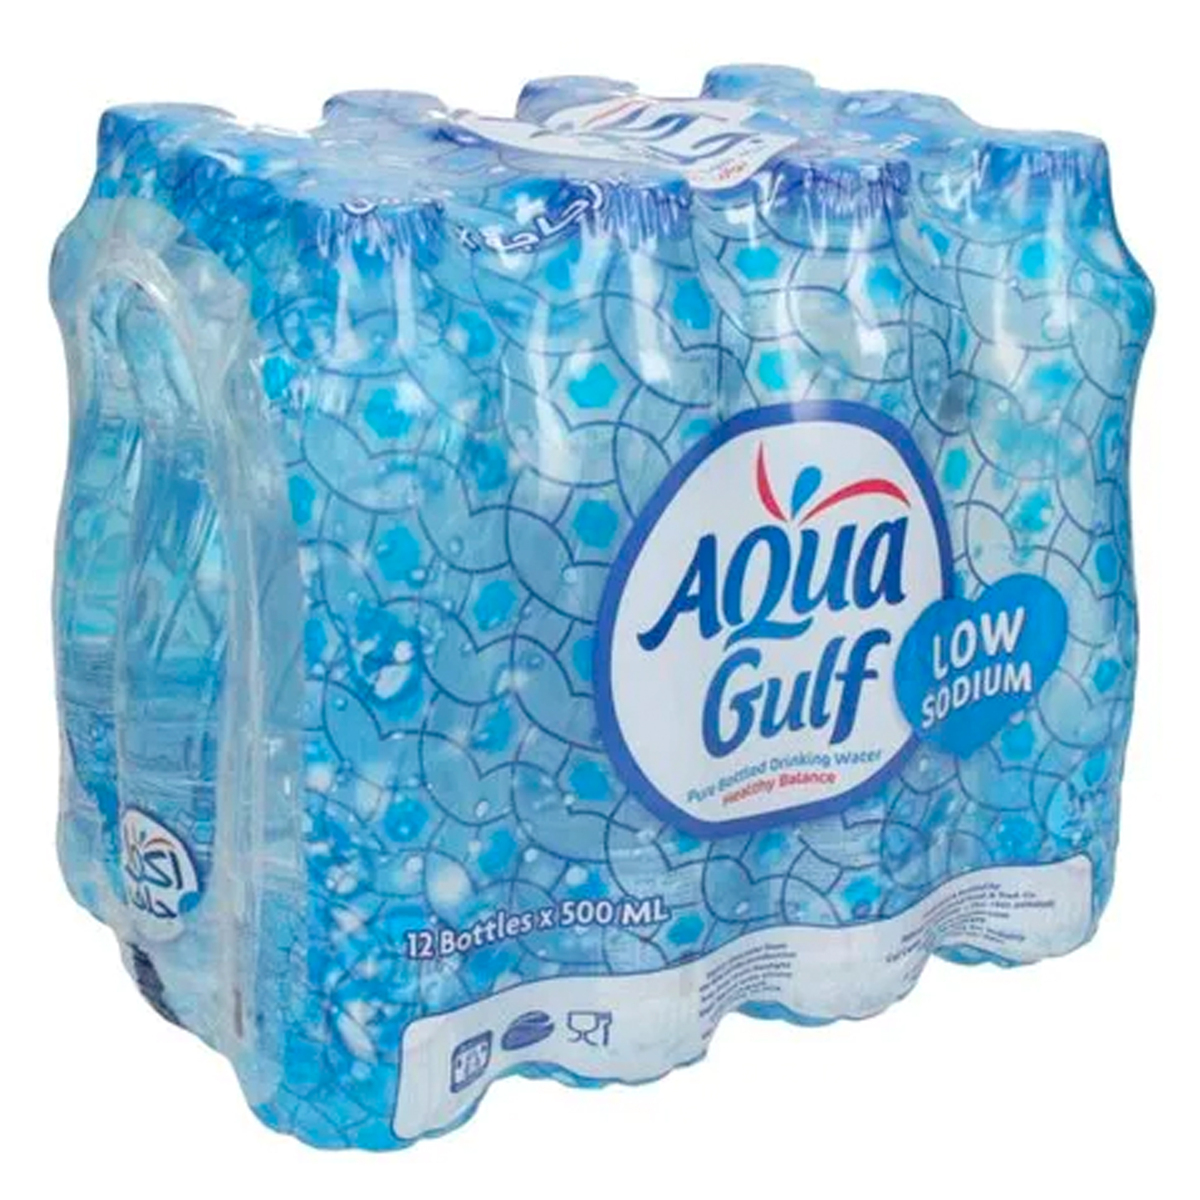 Aqua Gulf Low Sodium Drinking Water 12 x 500 ml